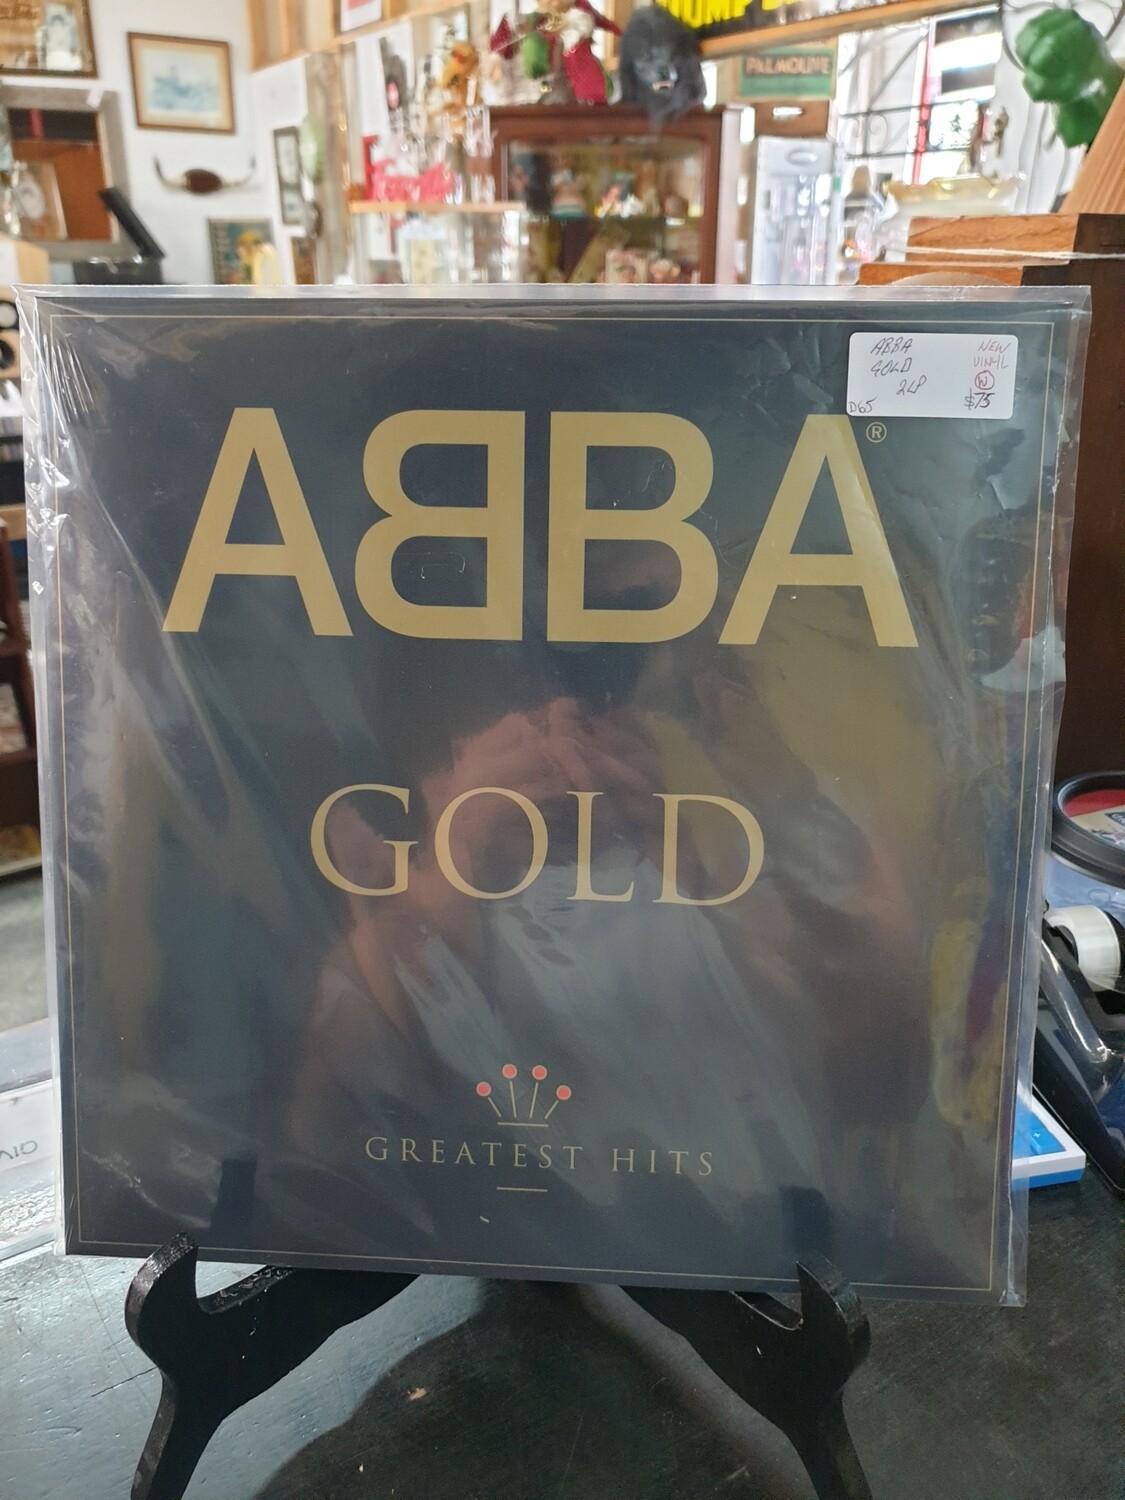 ABBA GOLD GREATEST HITS 2LP "NEW" VINYL